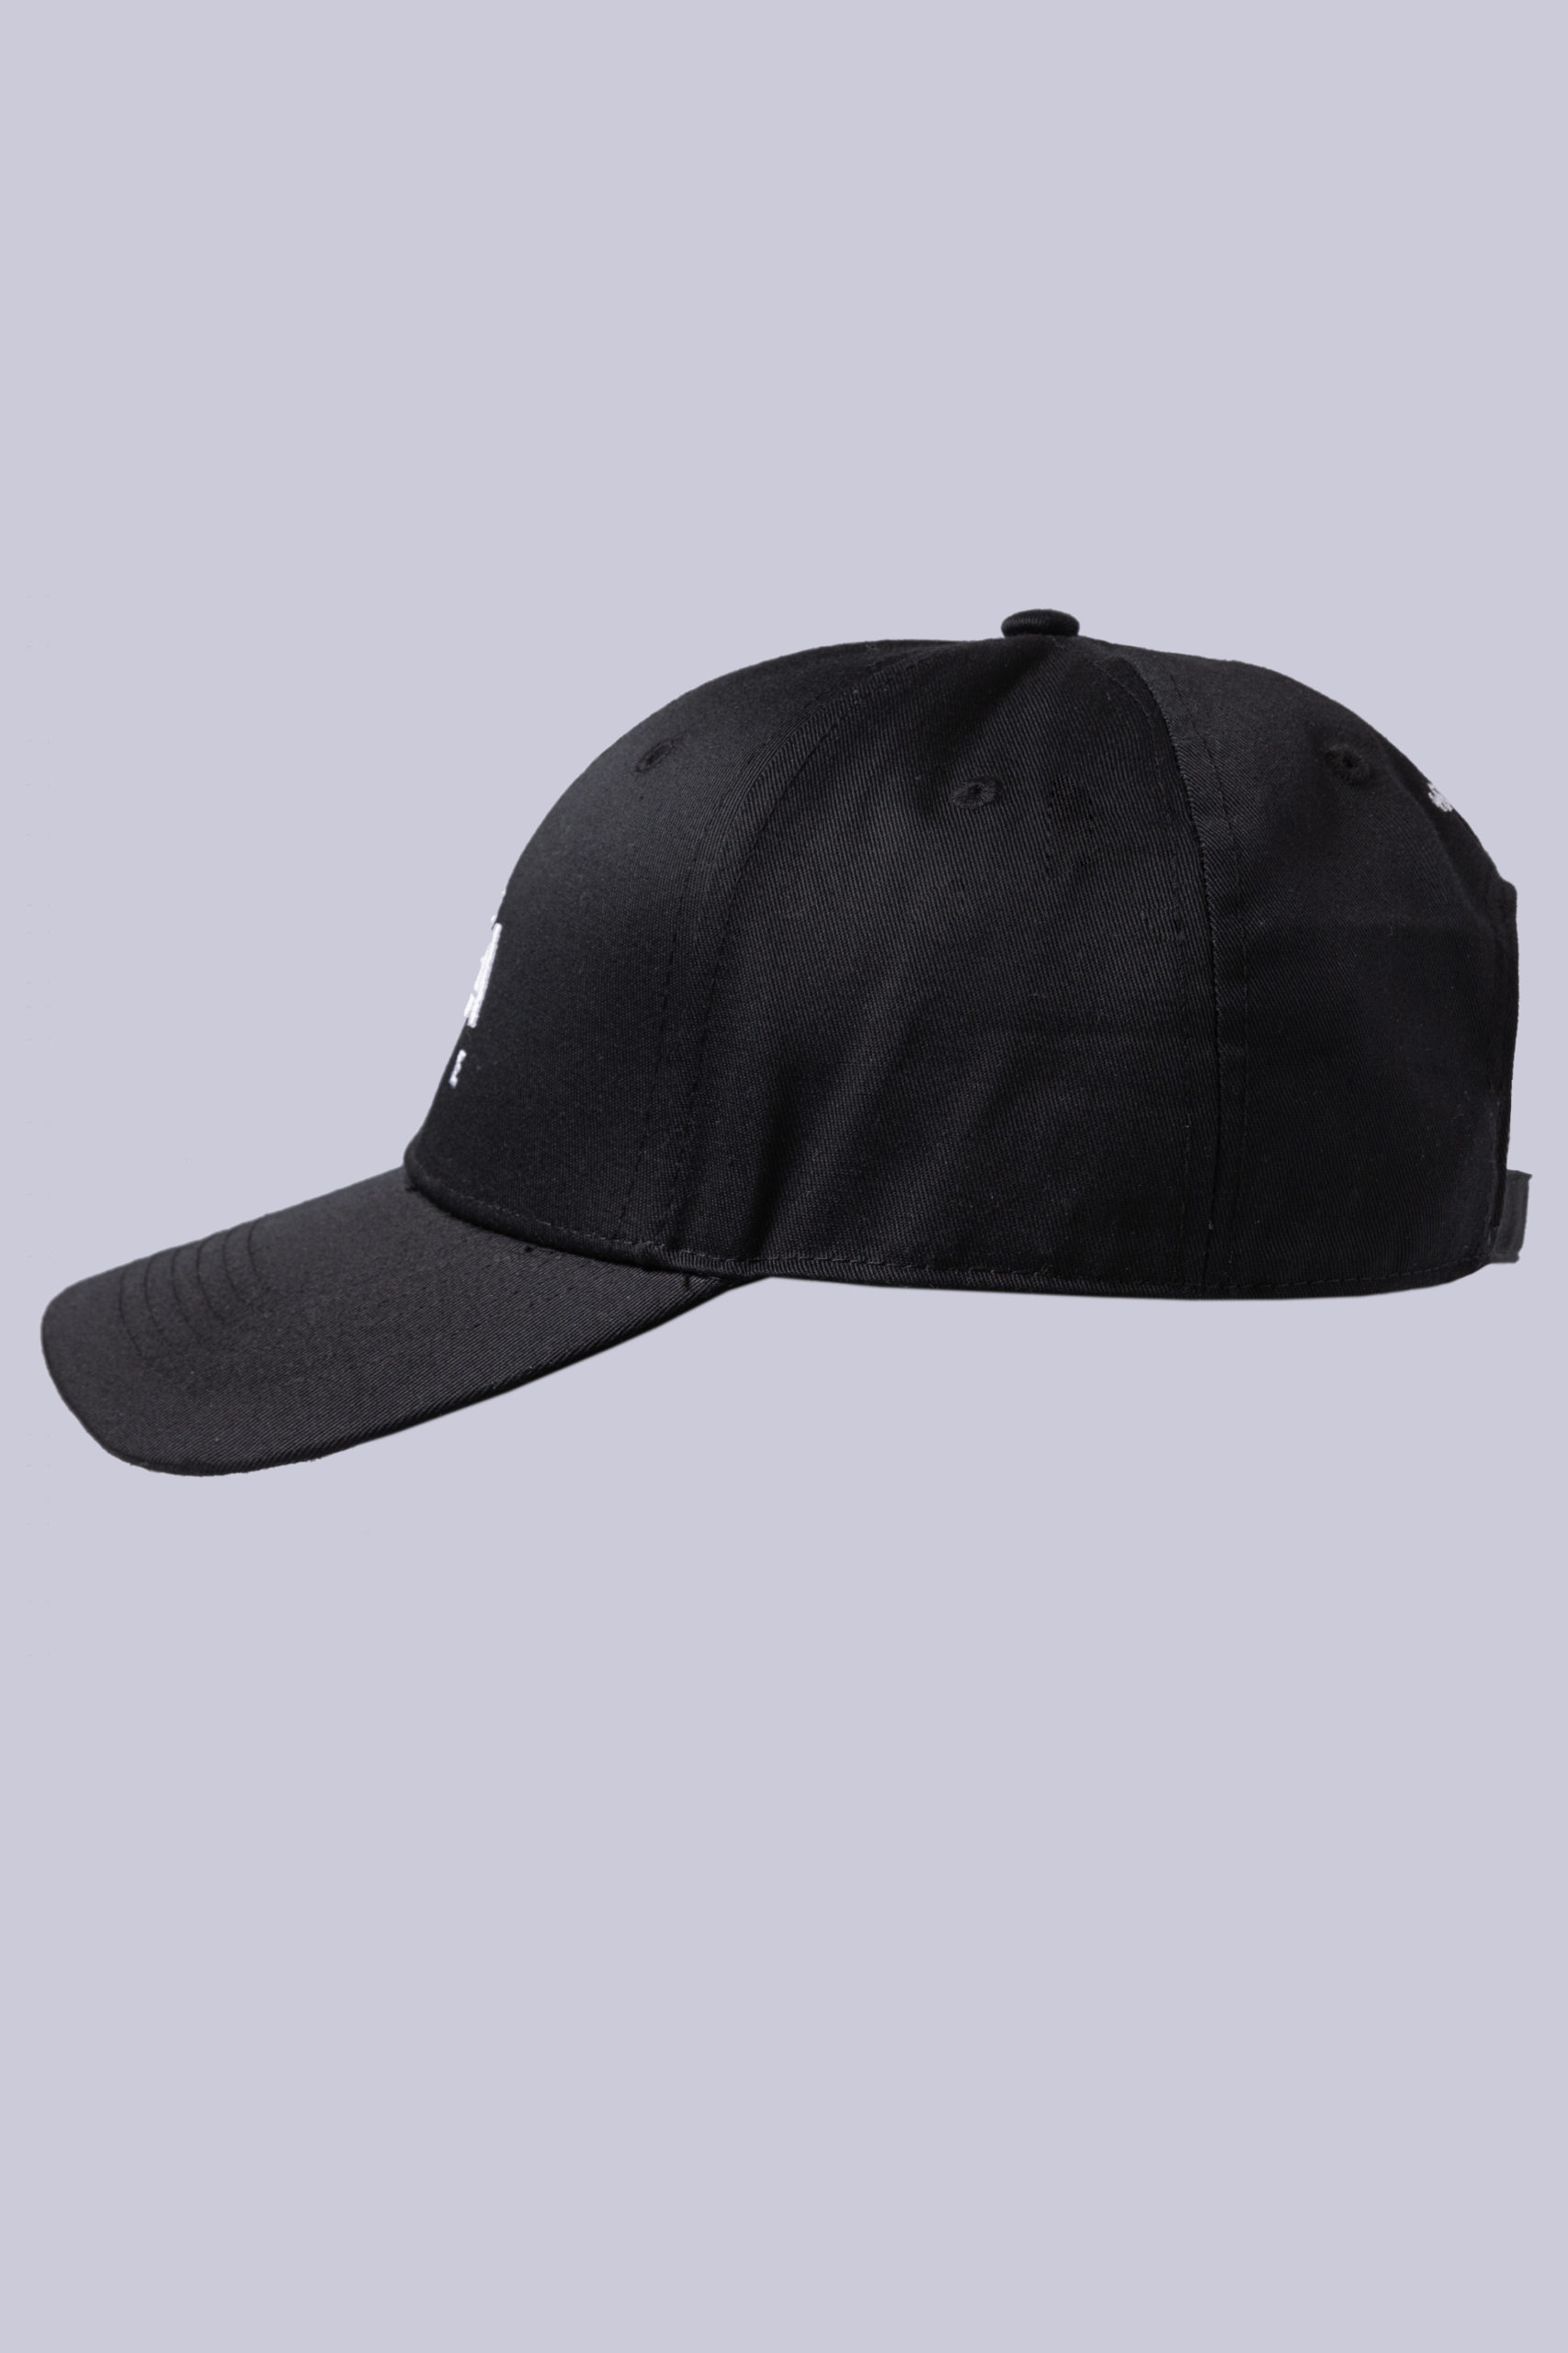 NSA Classic Series Neon Tie Dye Snapback Hat: TD9200-NR